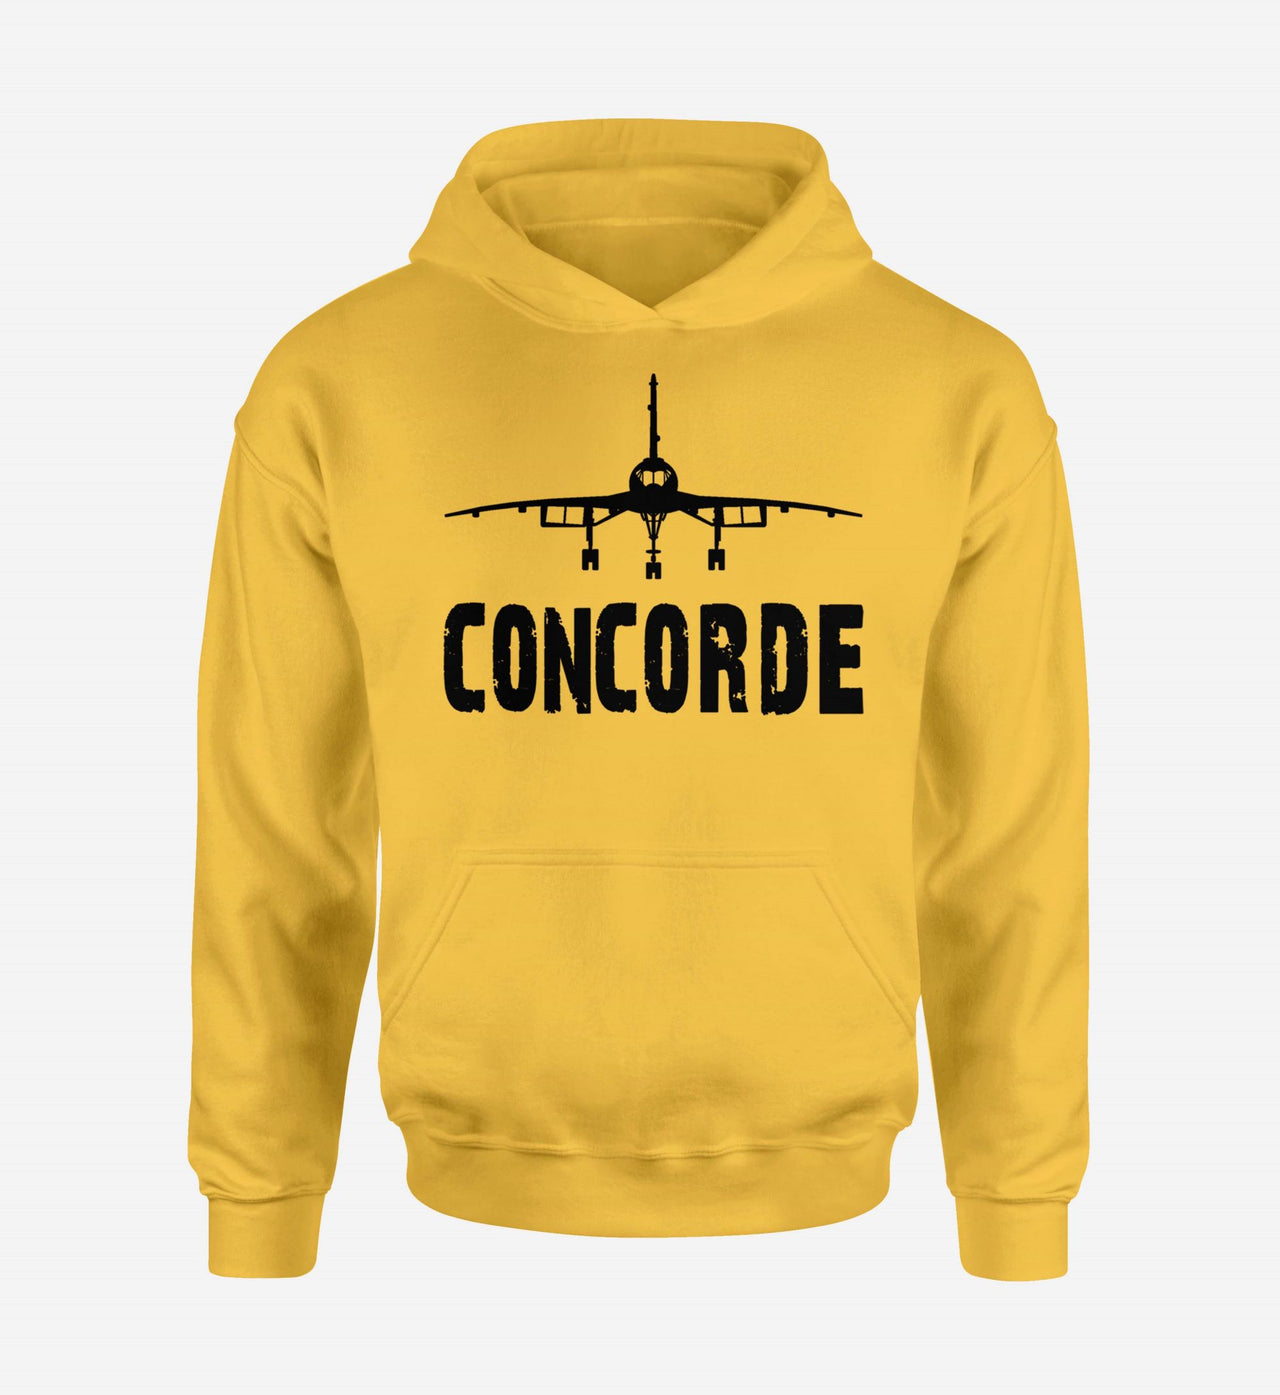 Concorde & Plane Designed Hoodies